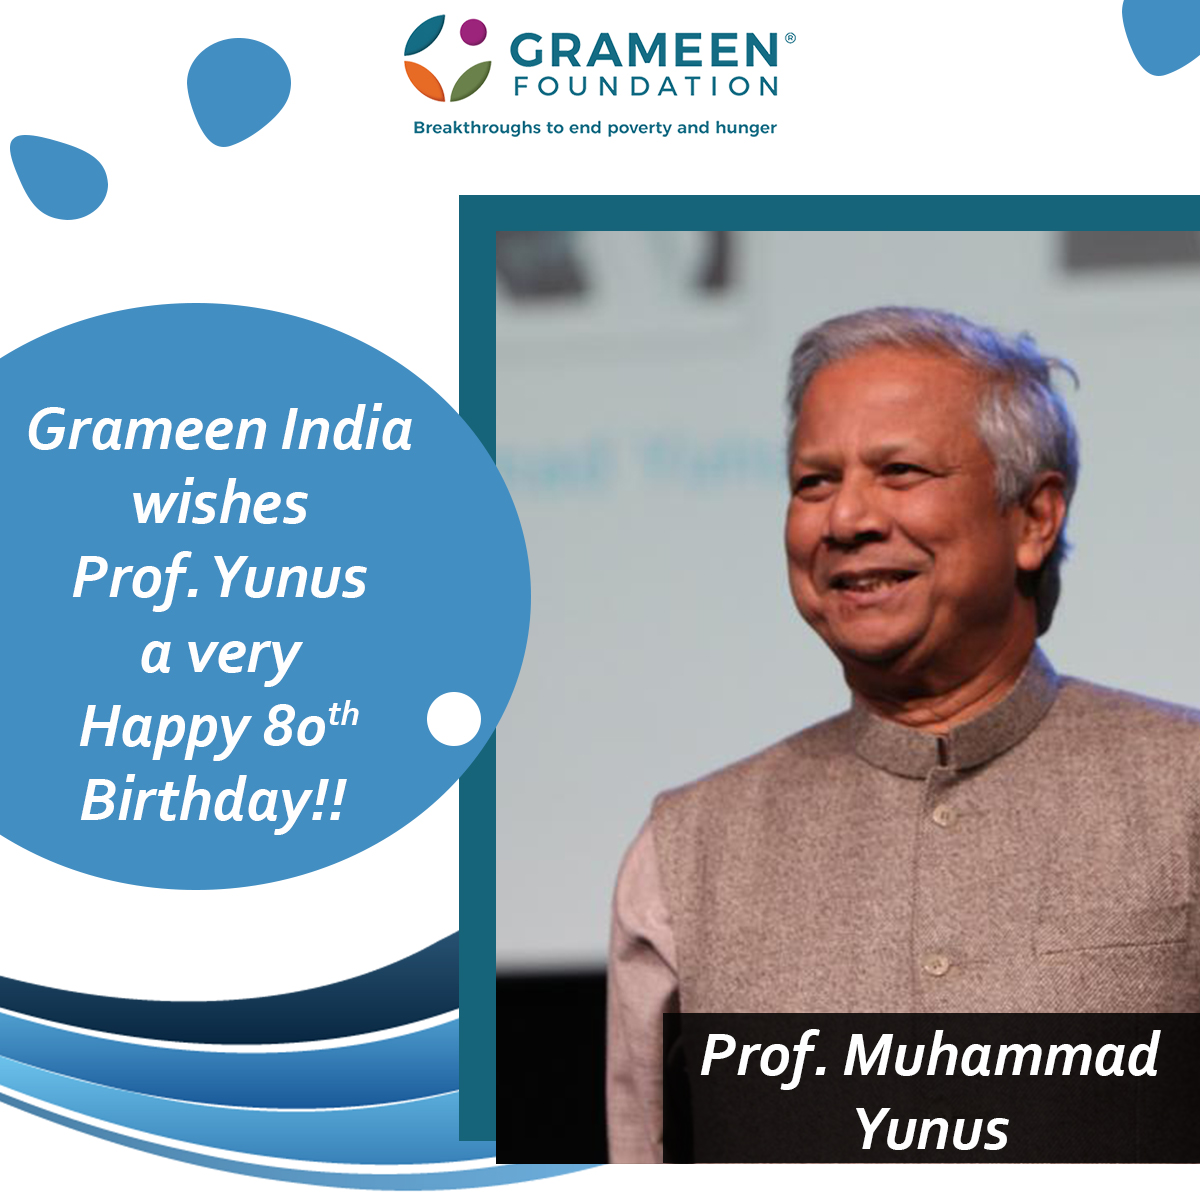 We wish Prof. Muhammad Yunus a very happy 80th birthday!!  